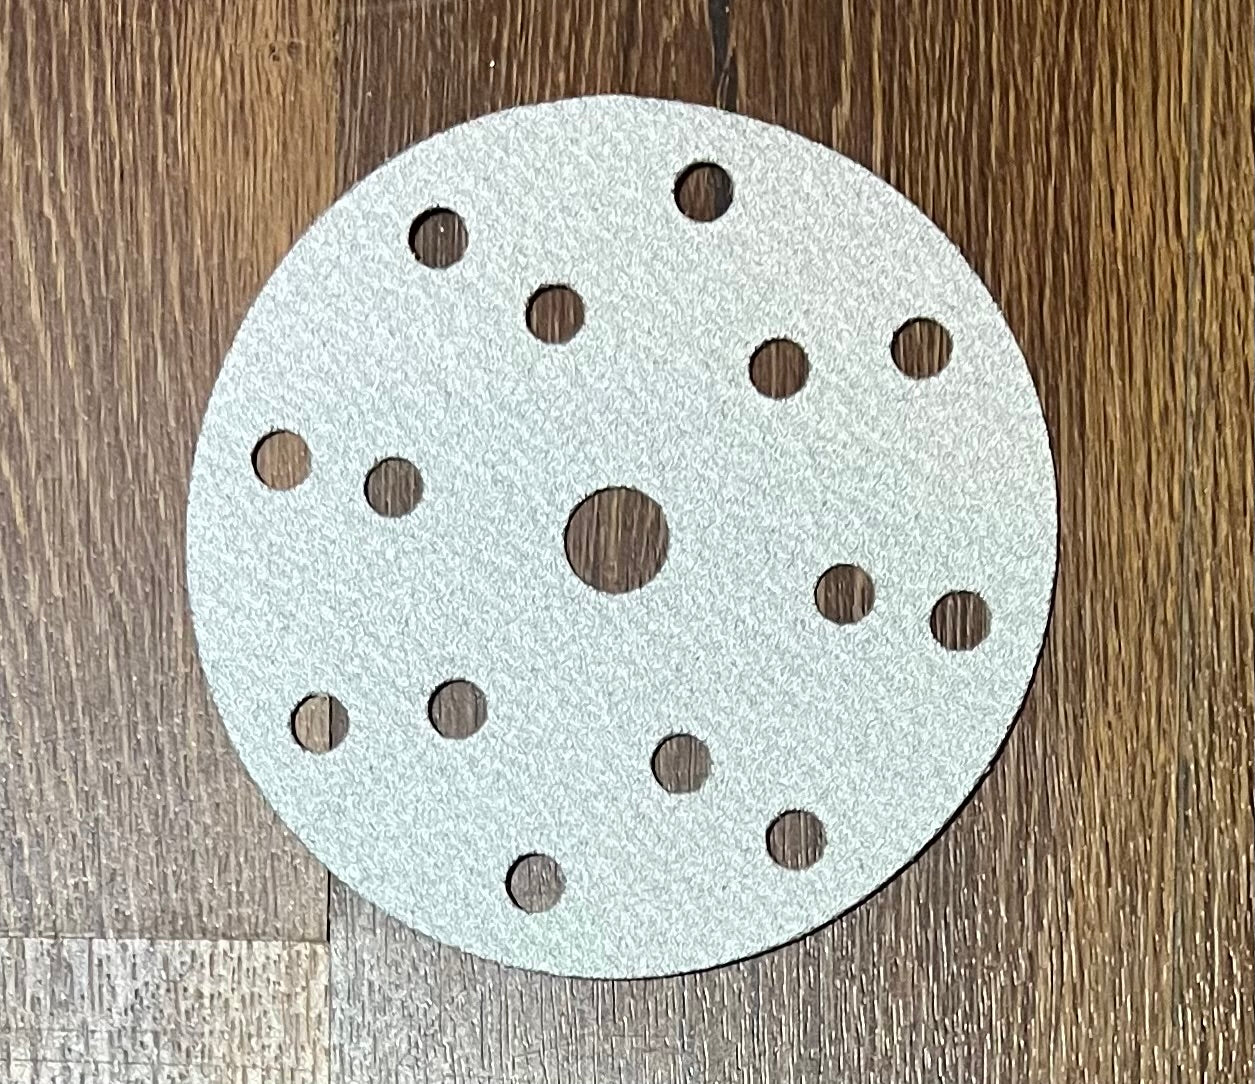 150mm 15 Hole Sanding Disc